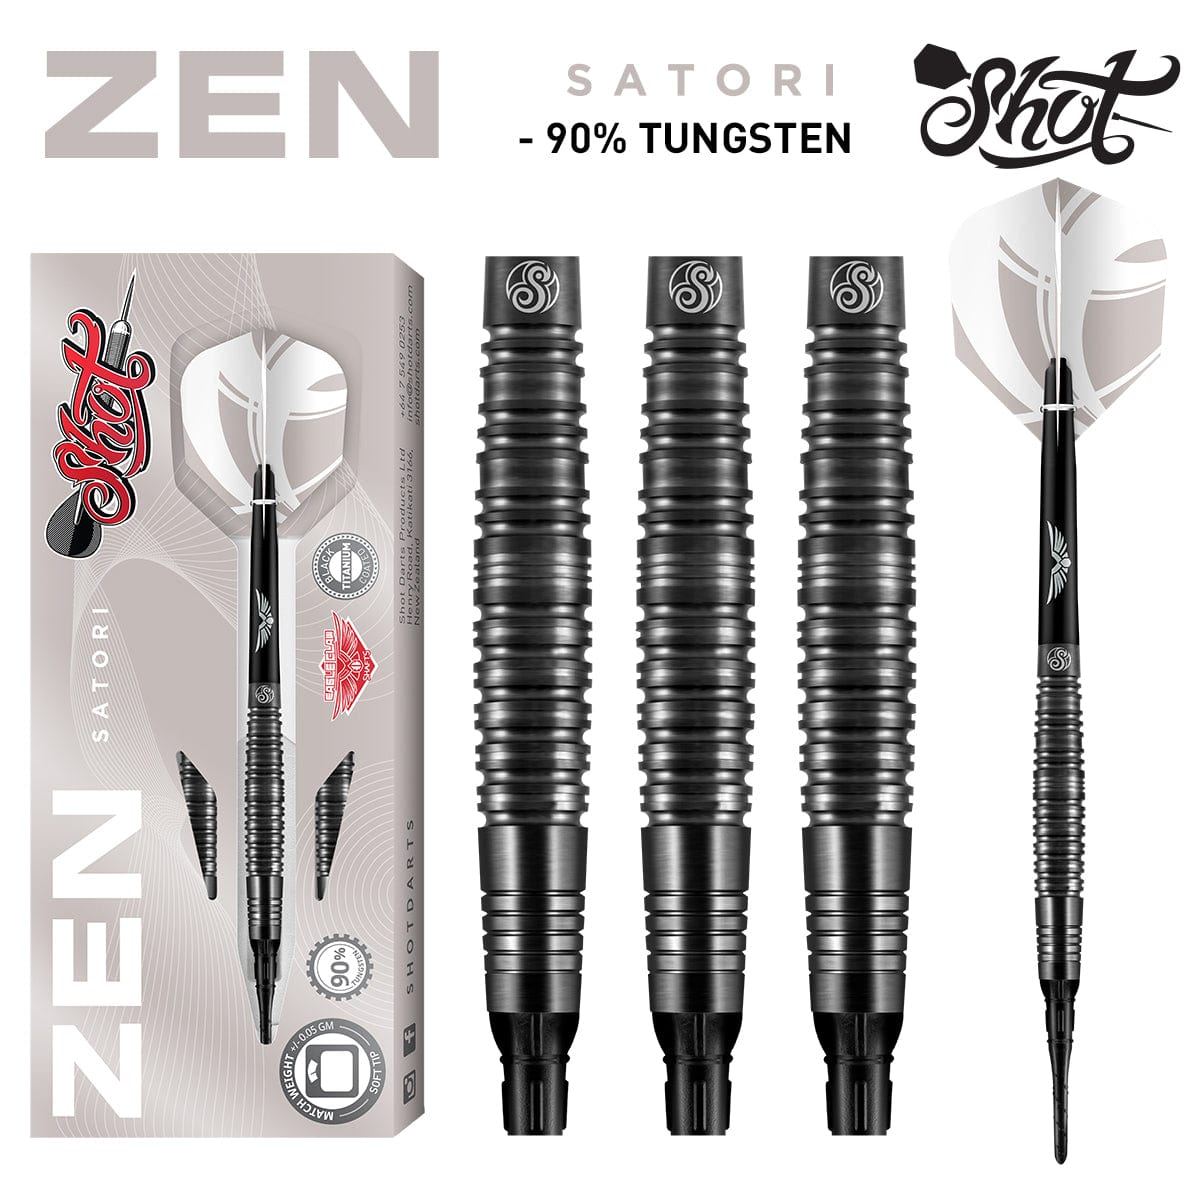 Zen Satori Soft Tip Dart Set - 90% Tungsten Barrels